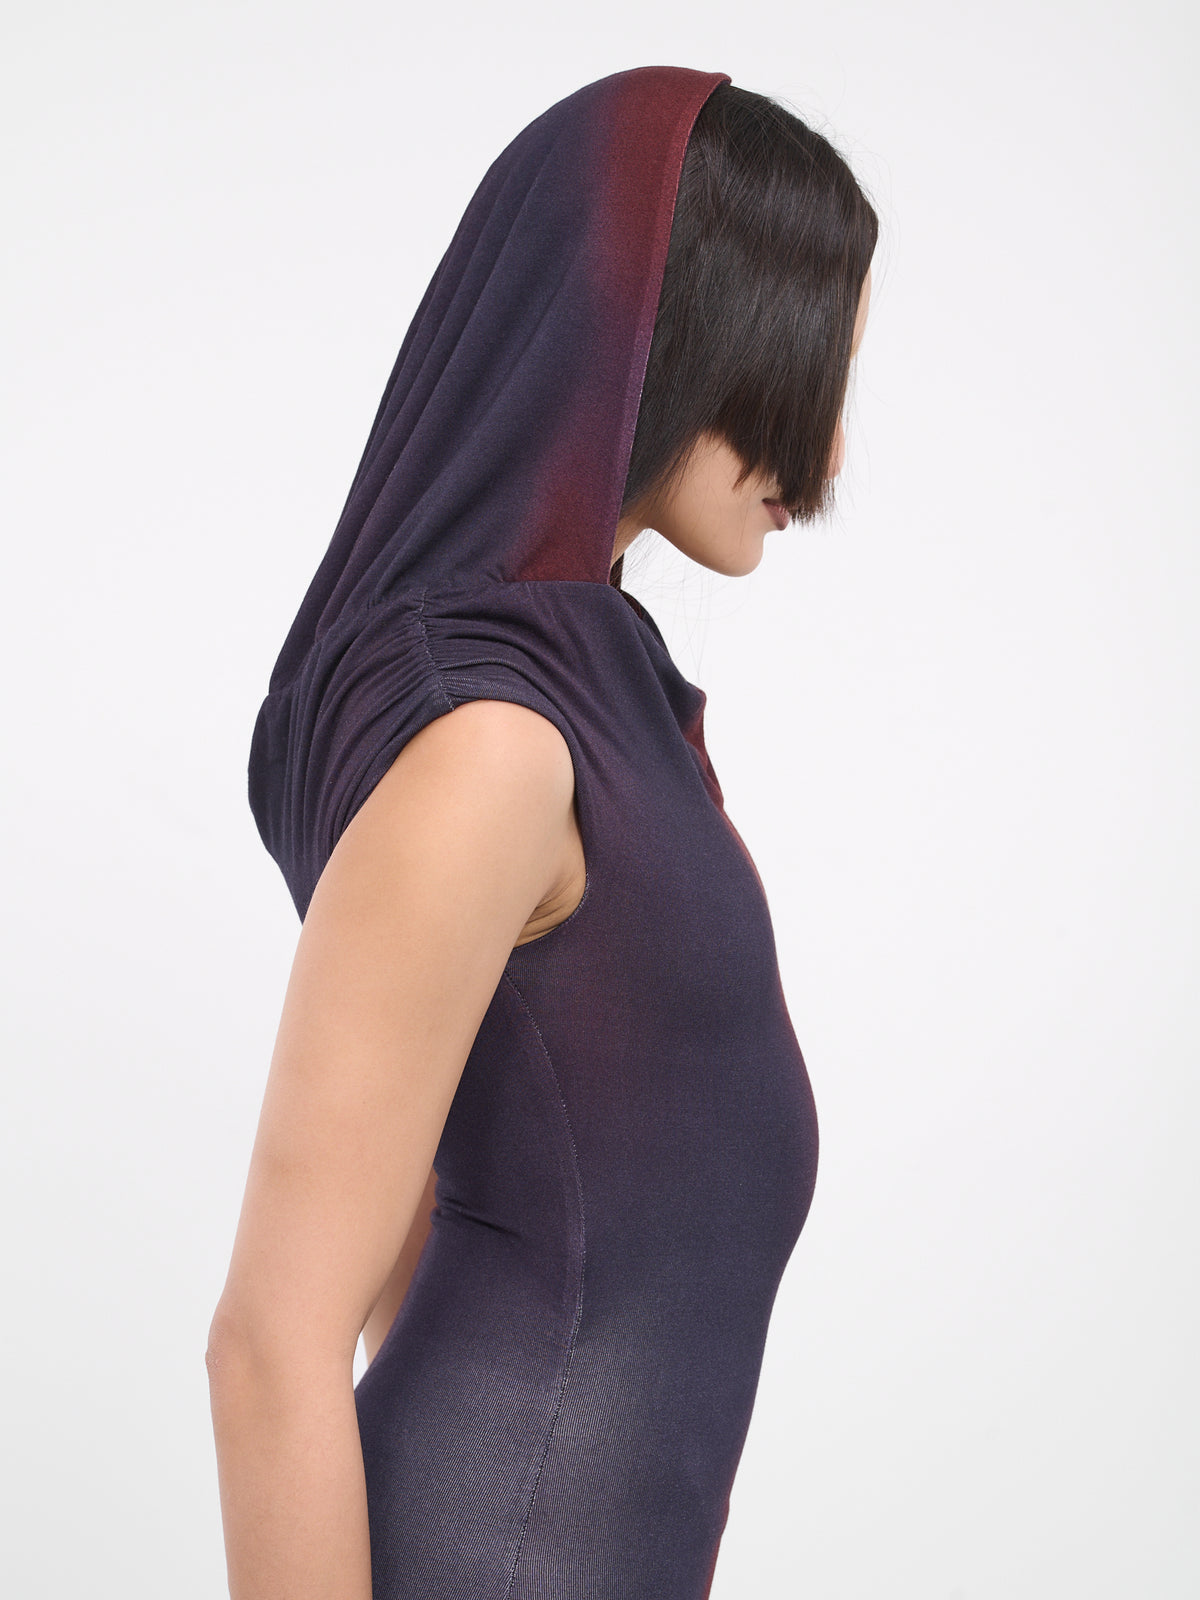 Hooded Maxi Dress (DRES-PRINT-02-BURGUNDY)